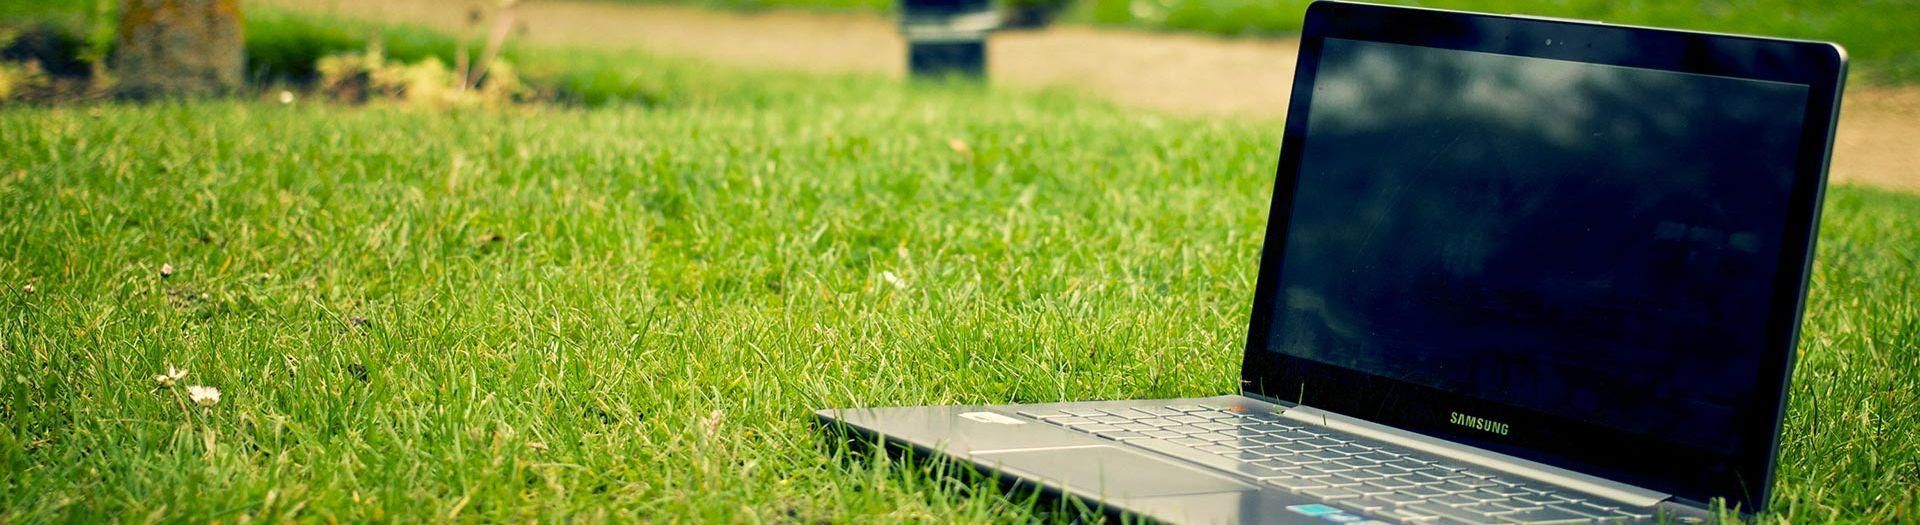 laptop-notebook-grass-meadow-1c6fa79c Se